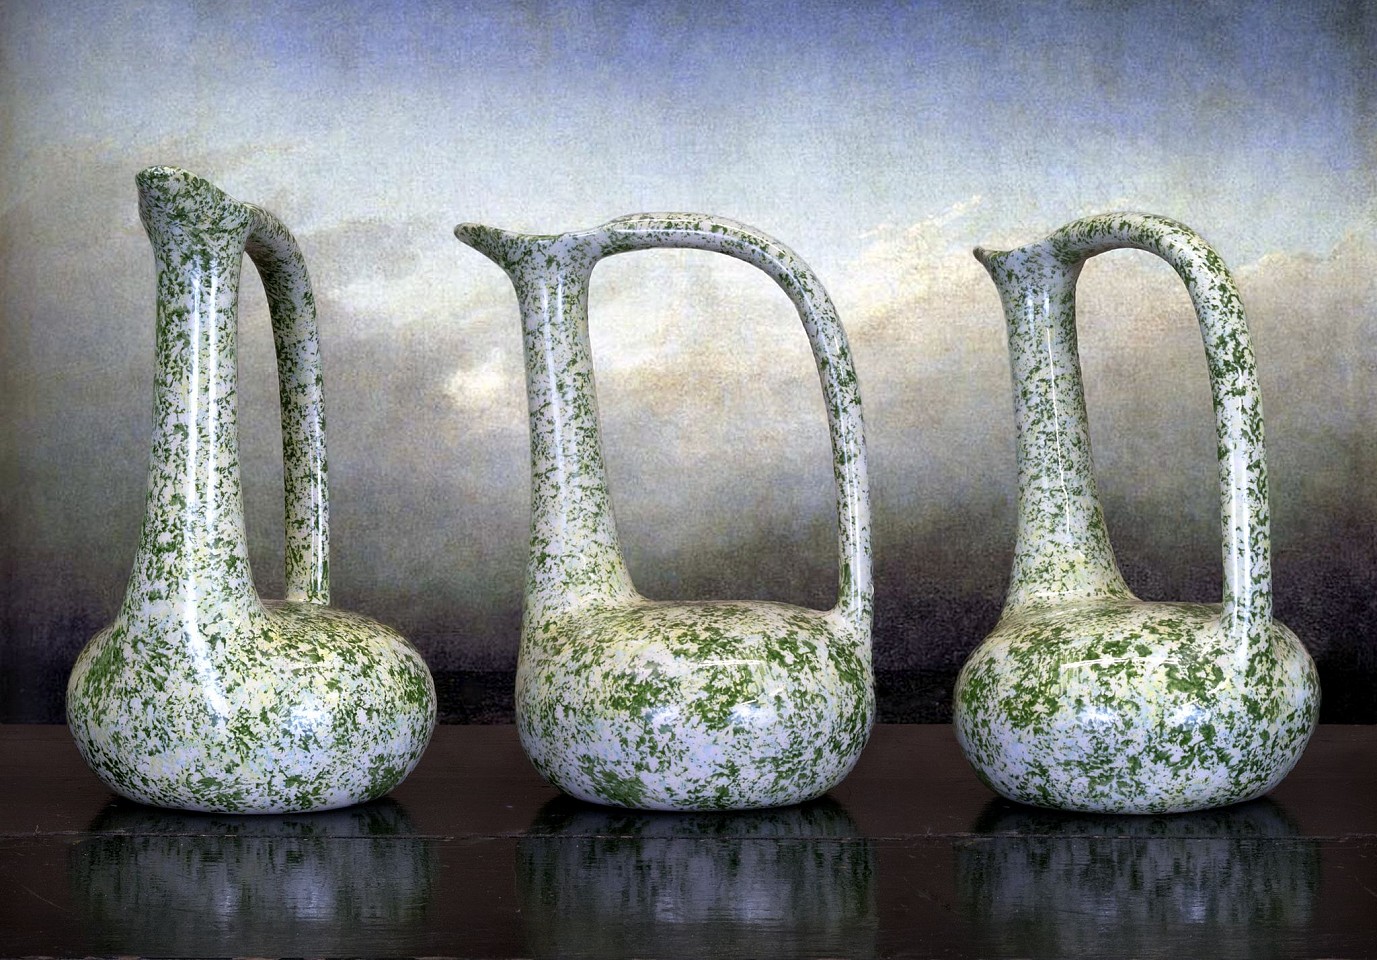 Oliver Wasow, Greek Vase
2015, Archival inkjet